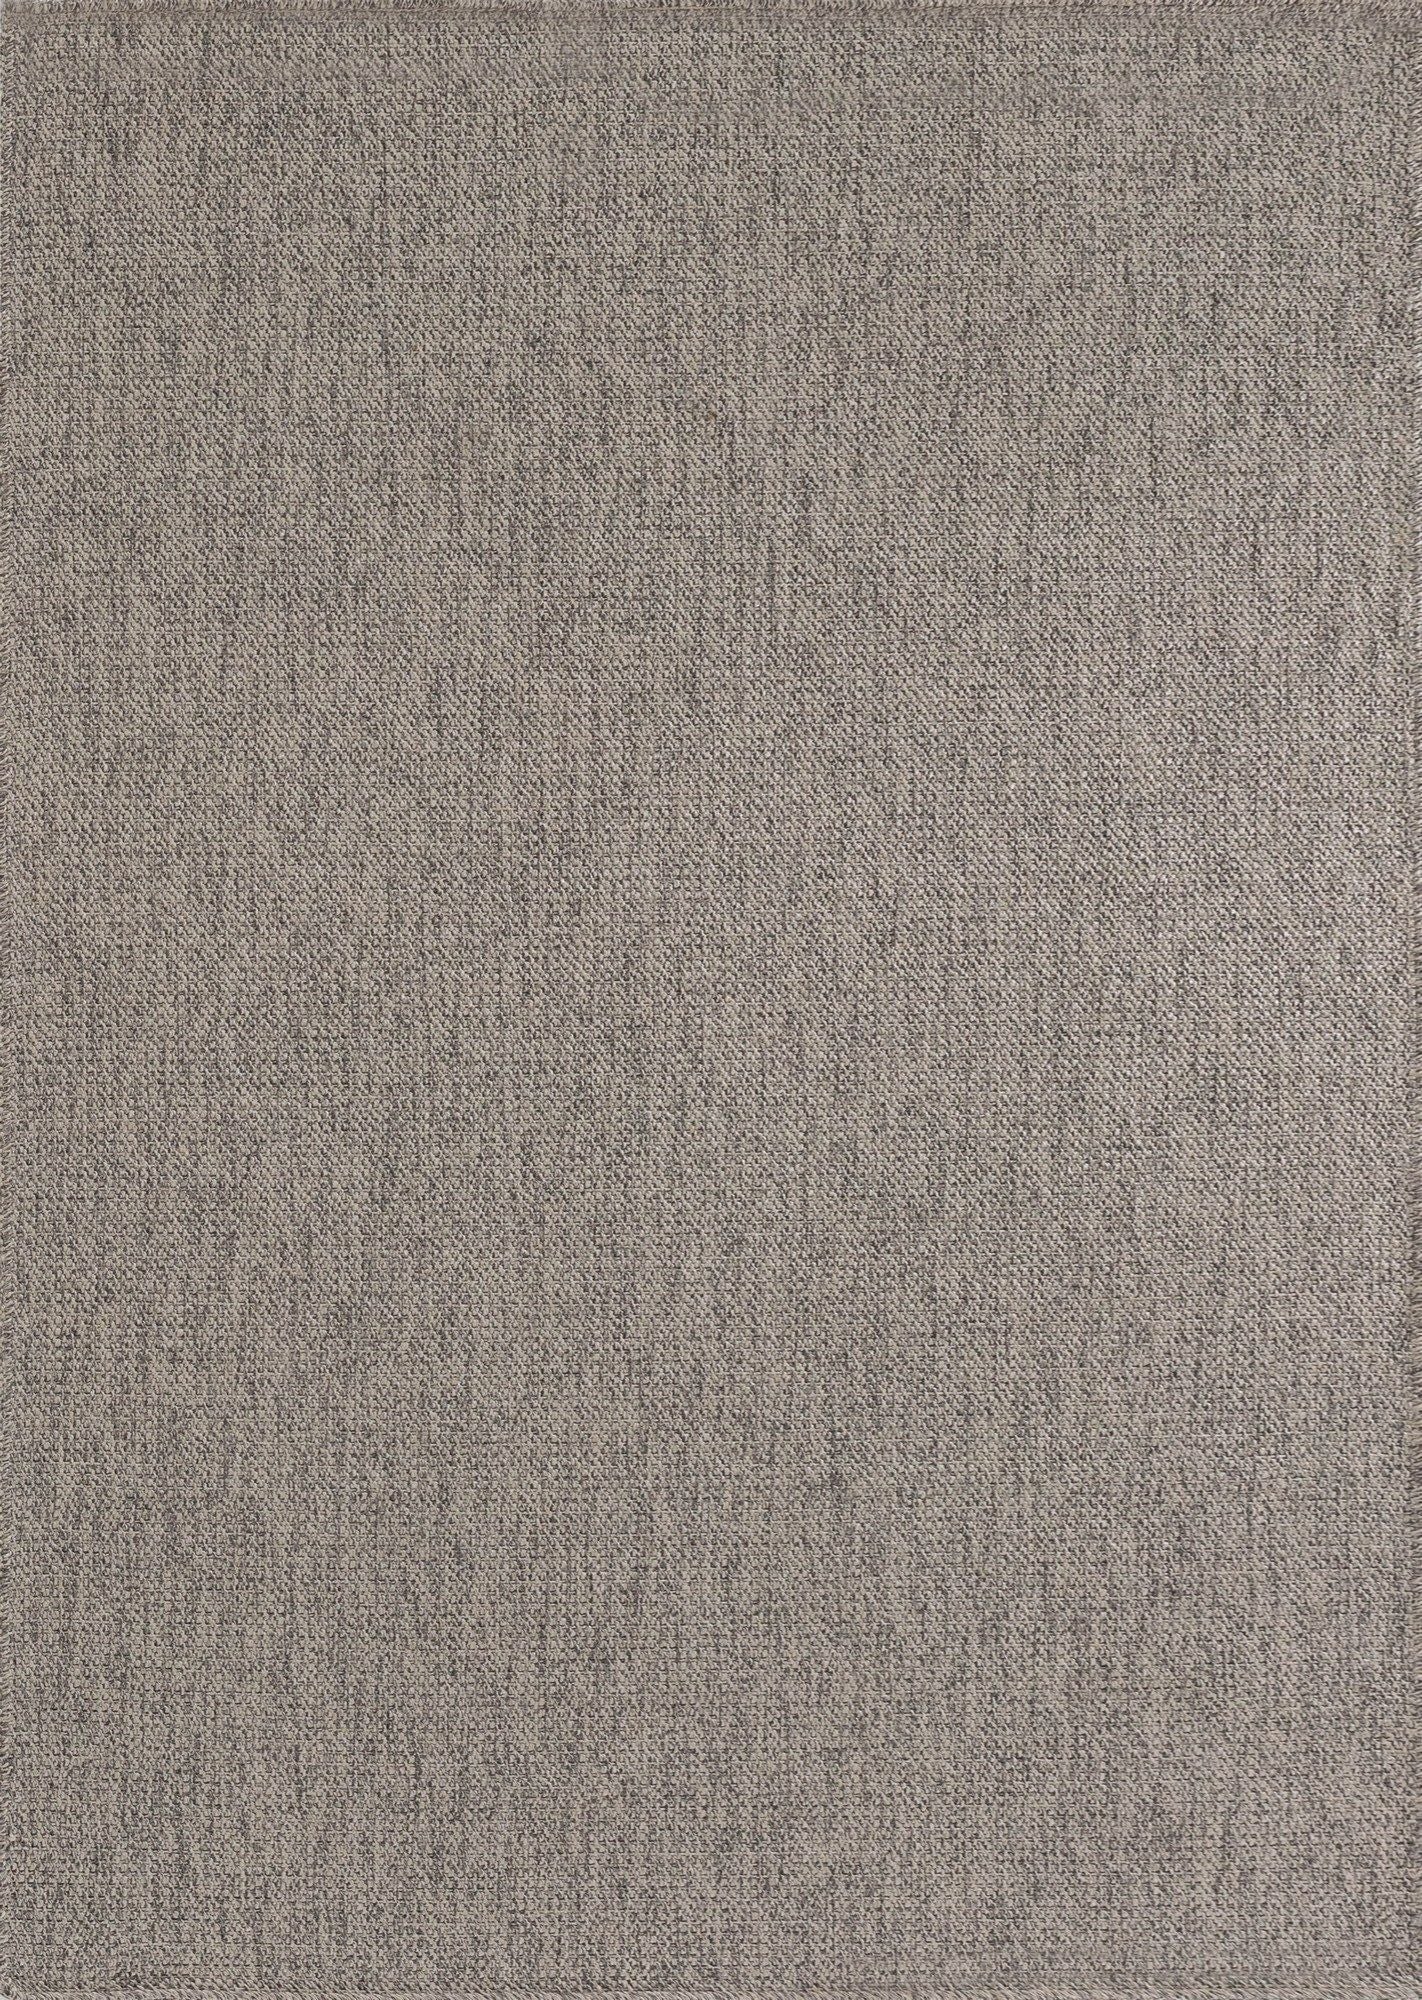 0602 Jut - Grey - Carpet (100 x 300)